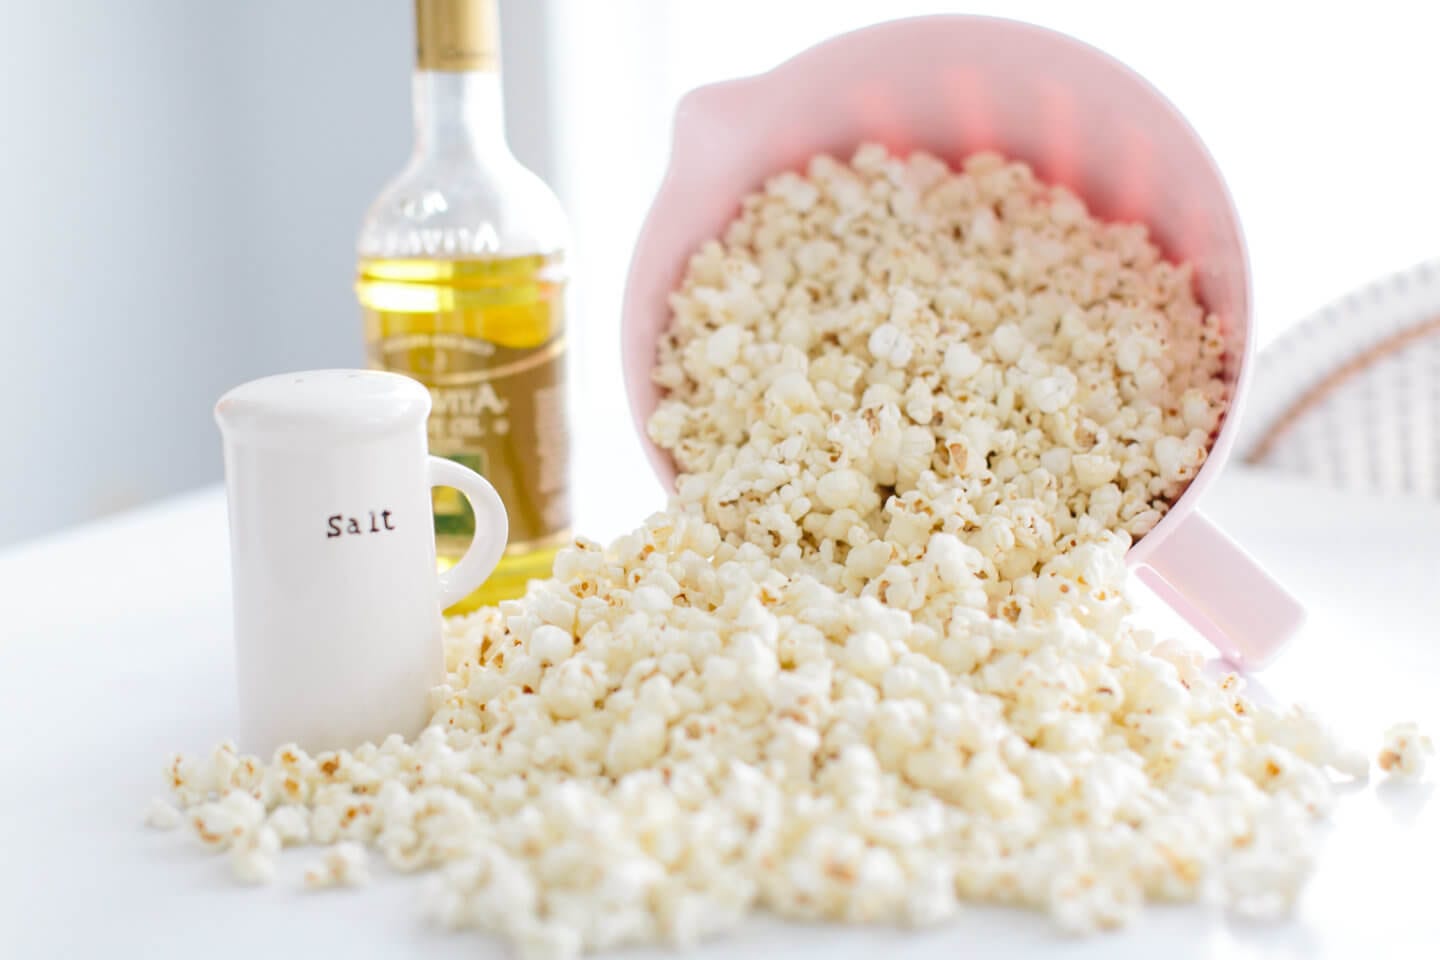 A pink bowl of popcorn spills out beside a bottle of olive oil and salt